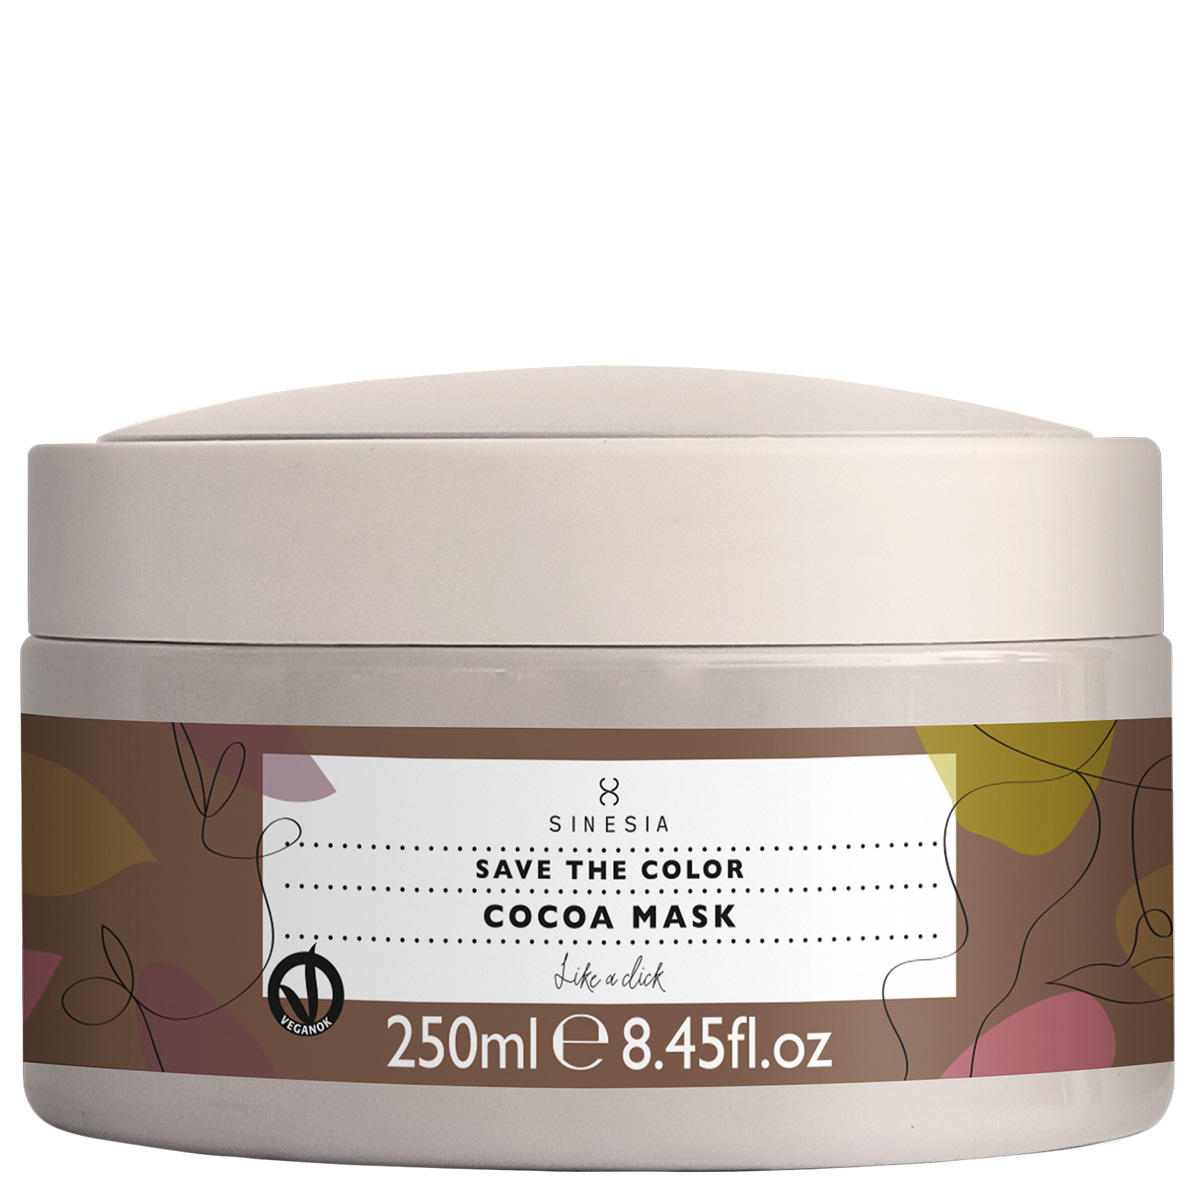 SINESIA Save the Color Cocoa Mask 250 ml - 1